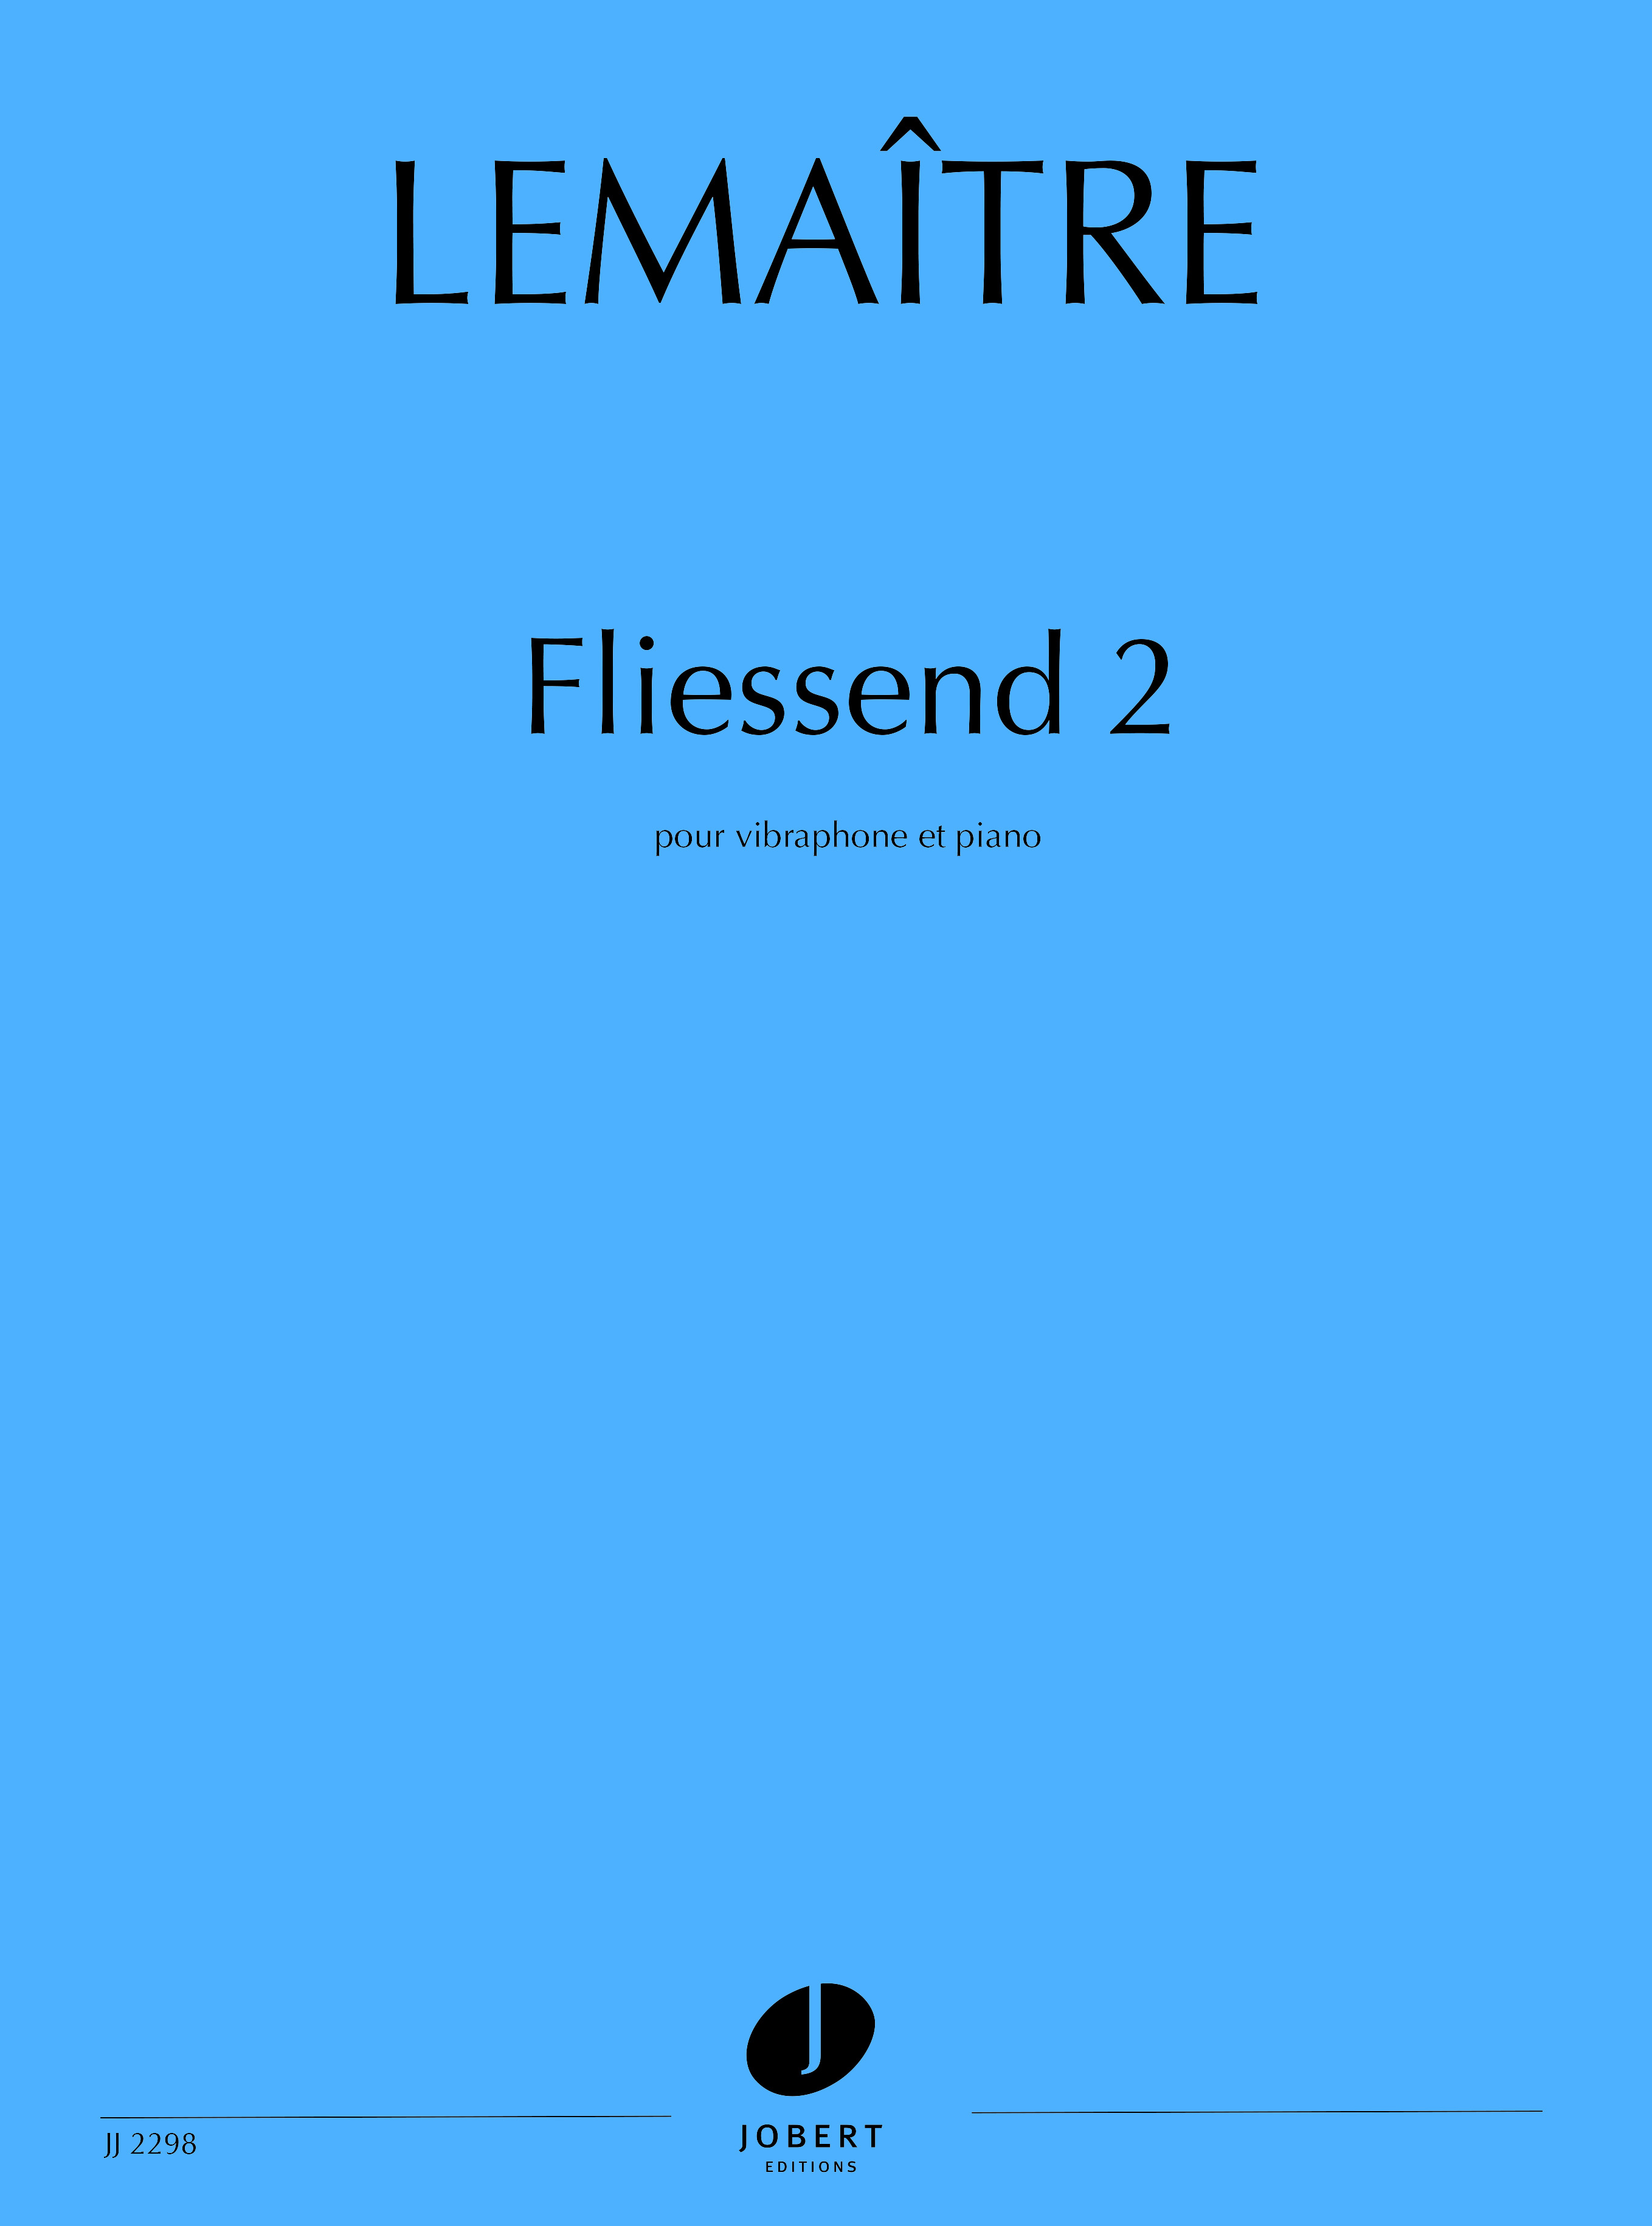 Lemaitre Fliessend 2 Vibraphone & Piano Sheet Music Songbook